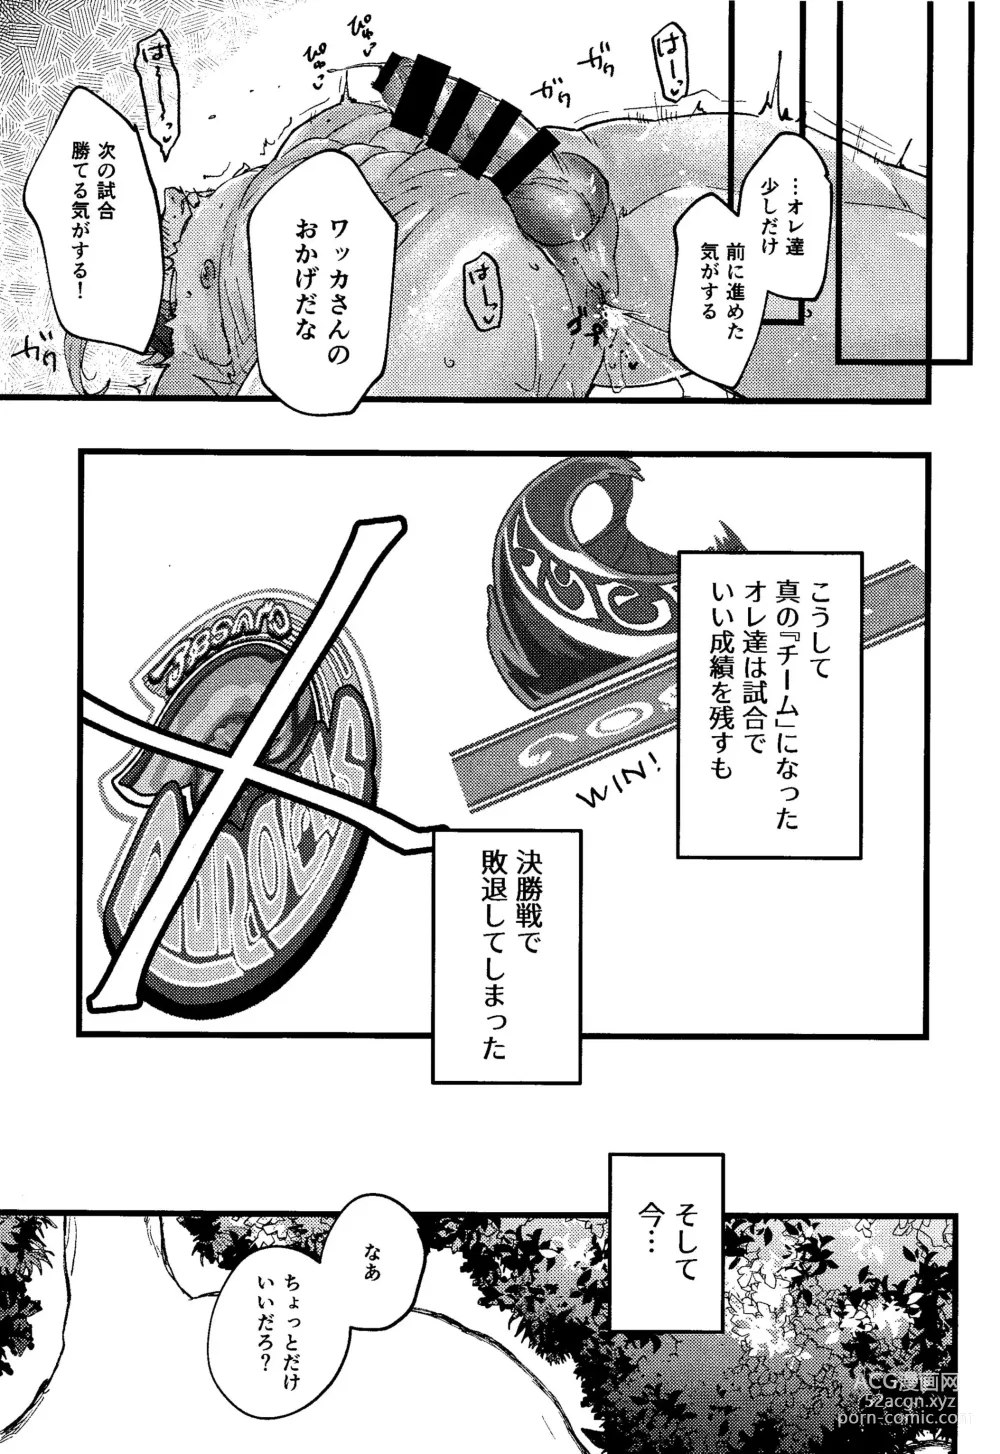 Page 20 of doujinshi Wakka